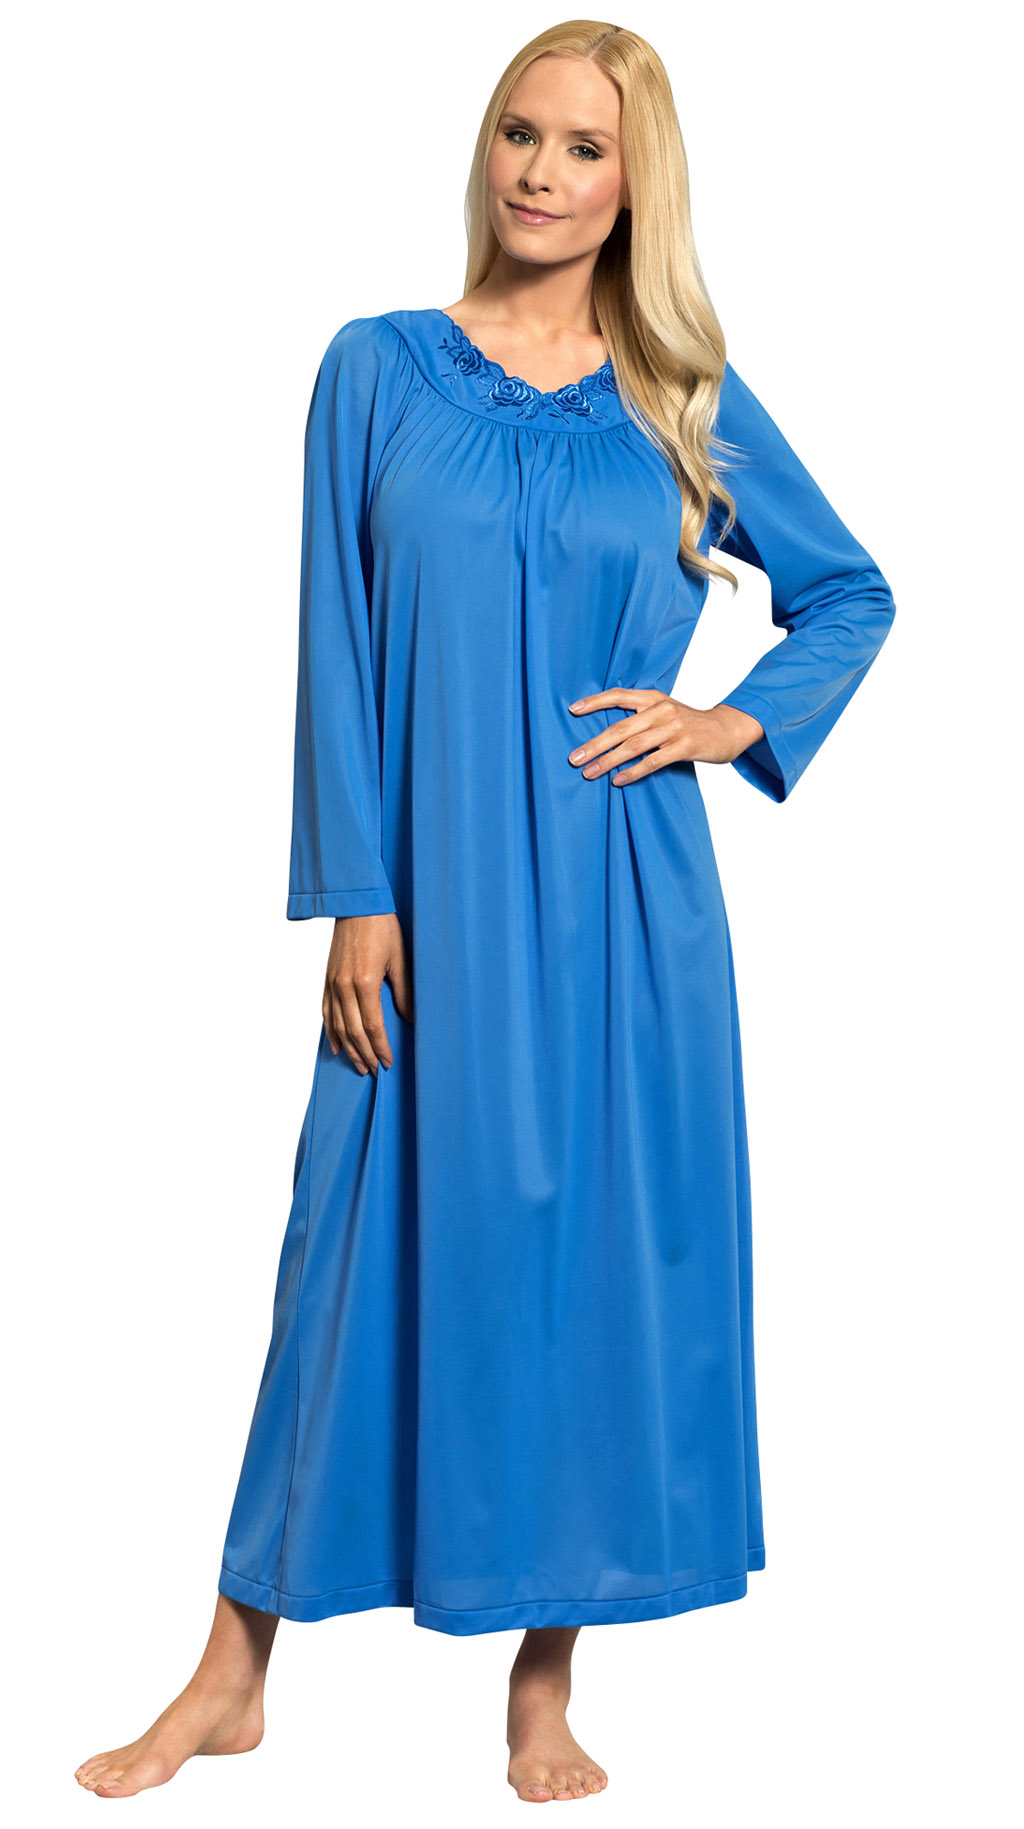 New,suitable Women's Cotton Sleep Shirt, Long Sleeve Button-down Nightshirt  Flannel Night Shirt,l, Blue